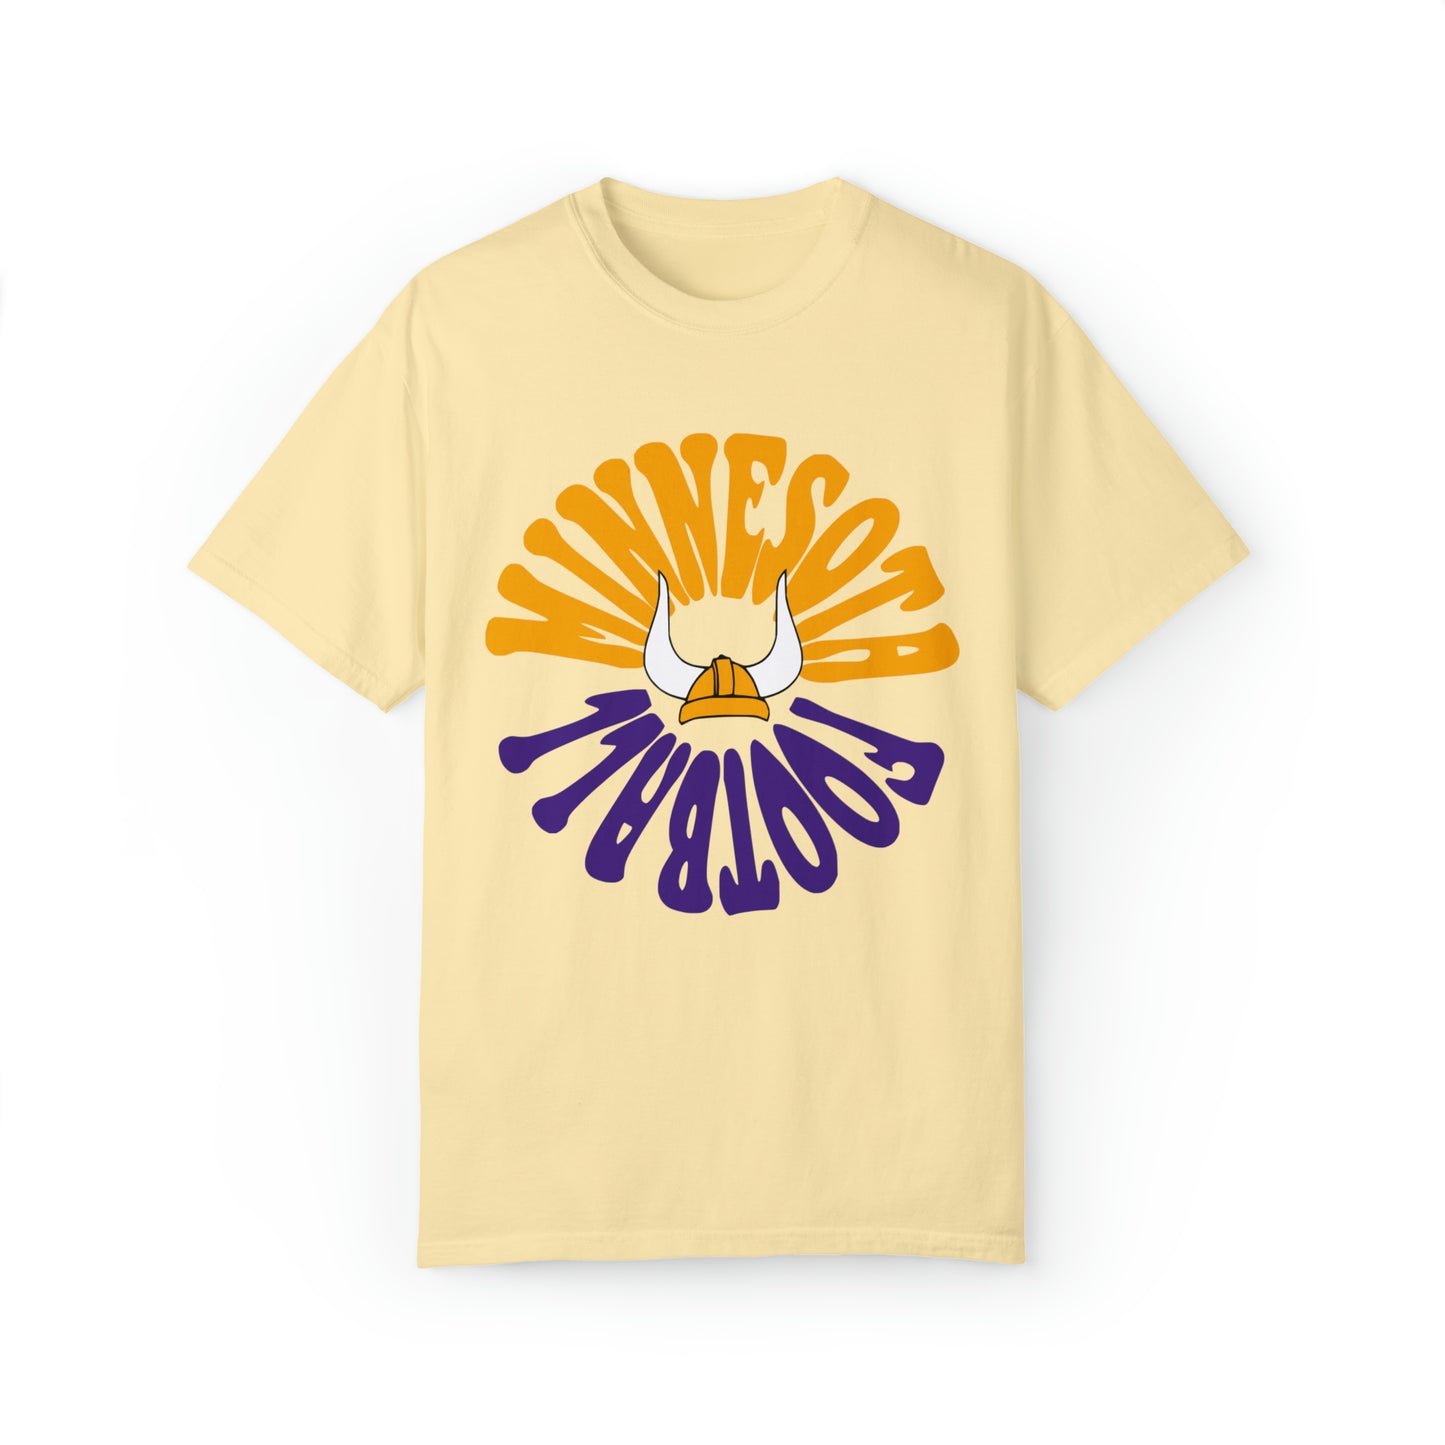 Comfort Colors Hippy Retro Minnesota Vikings NFL Football Tee - Short Sleeve T-Shirt Unisex Men's Women's Oversized Apparel - Design 2